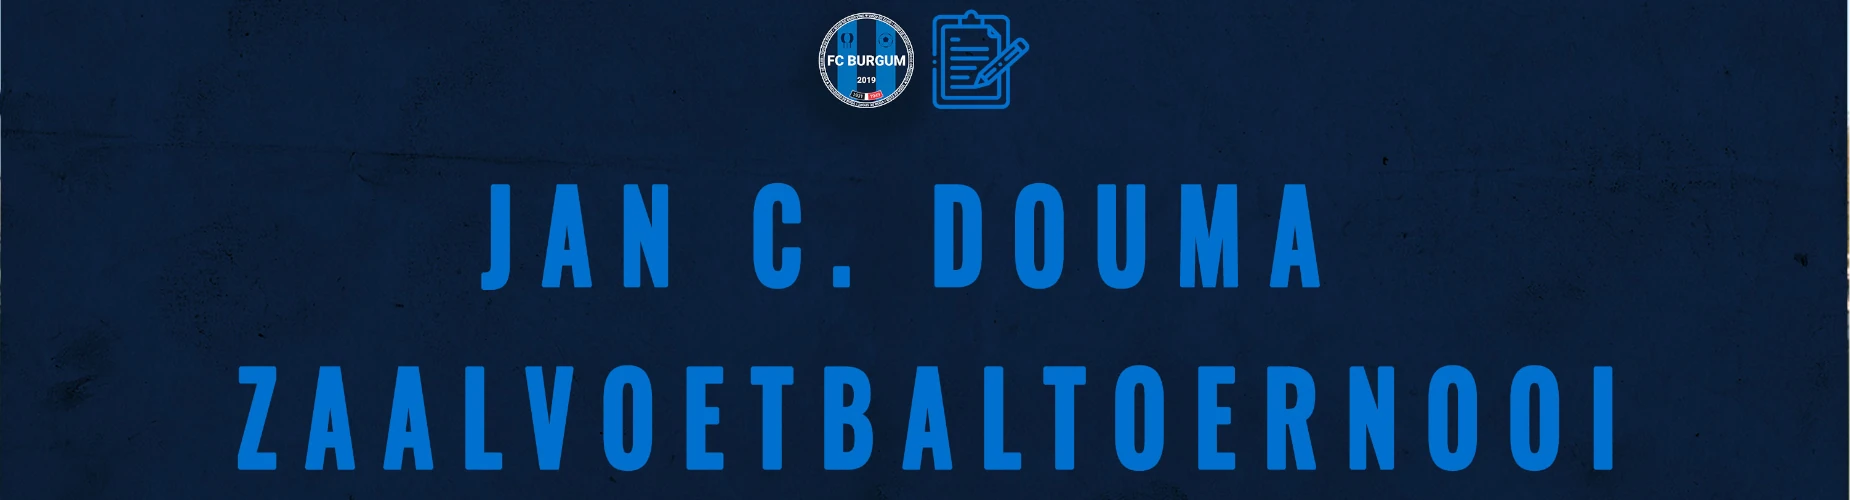 Banner - Jan C. Douma Zaalvoetbaltoernooi - FC Burgum - Burgum